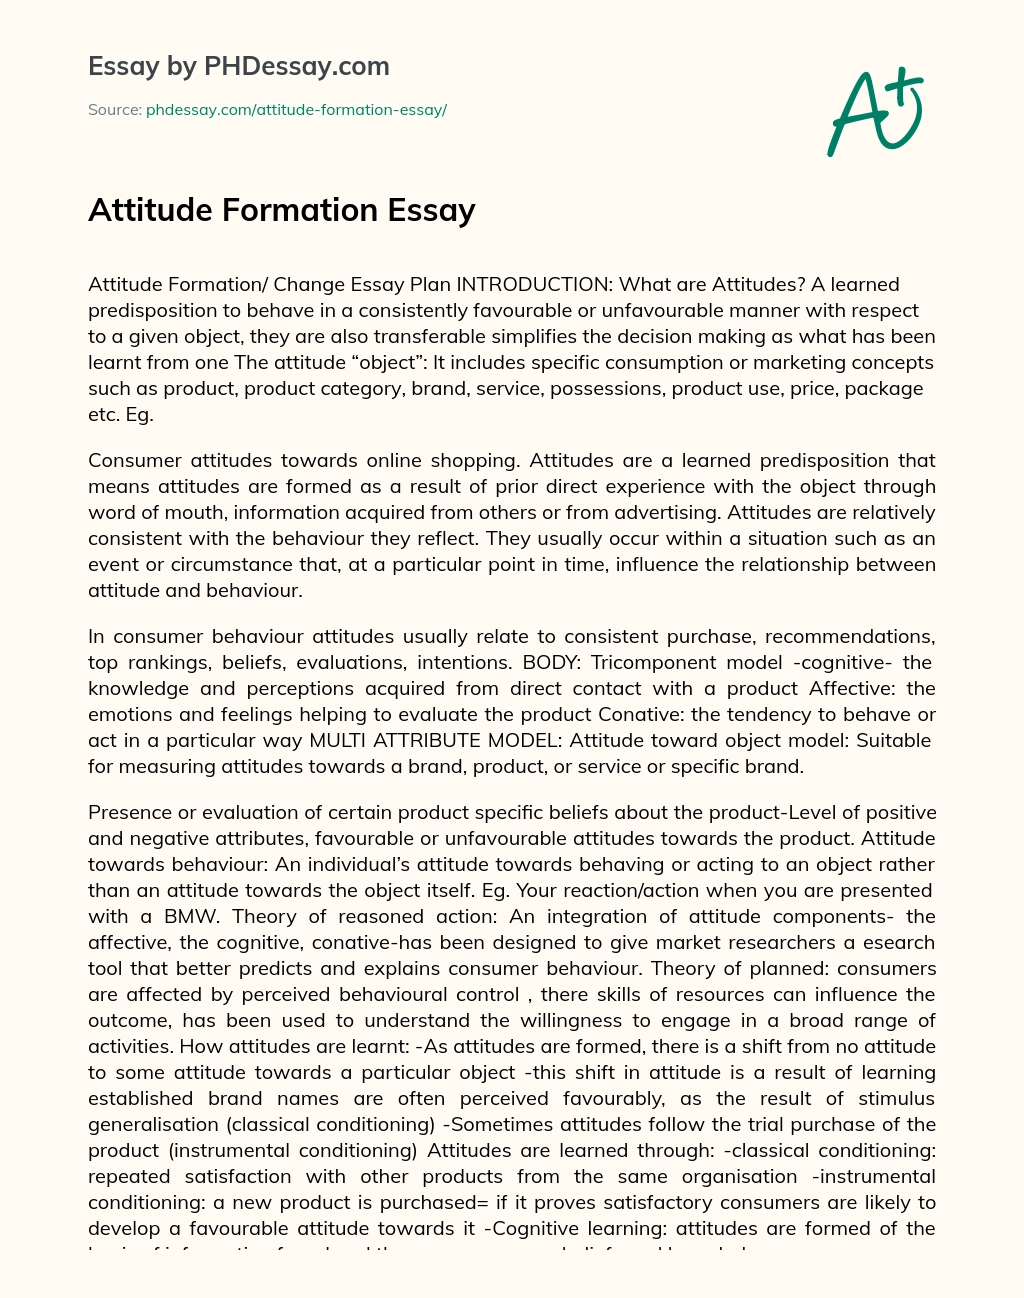 Attitude Formation Essay essay